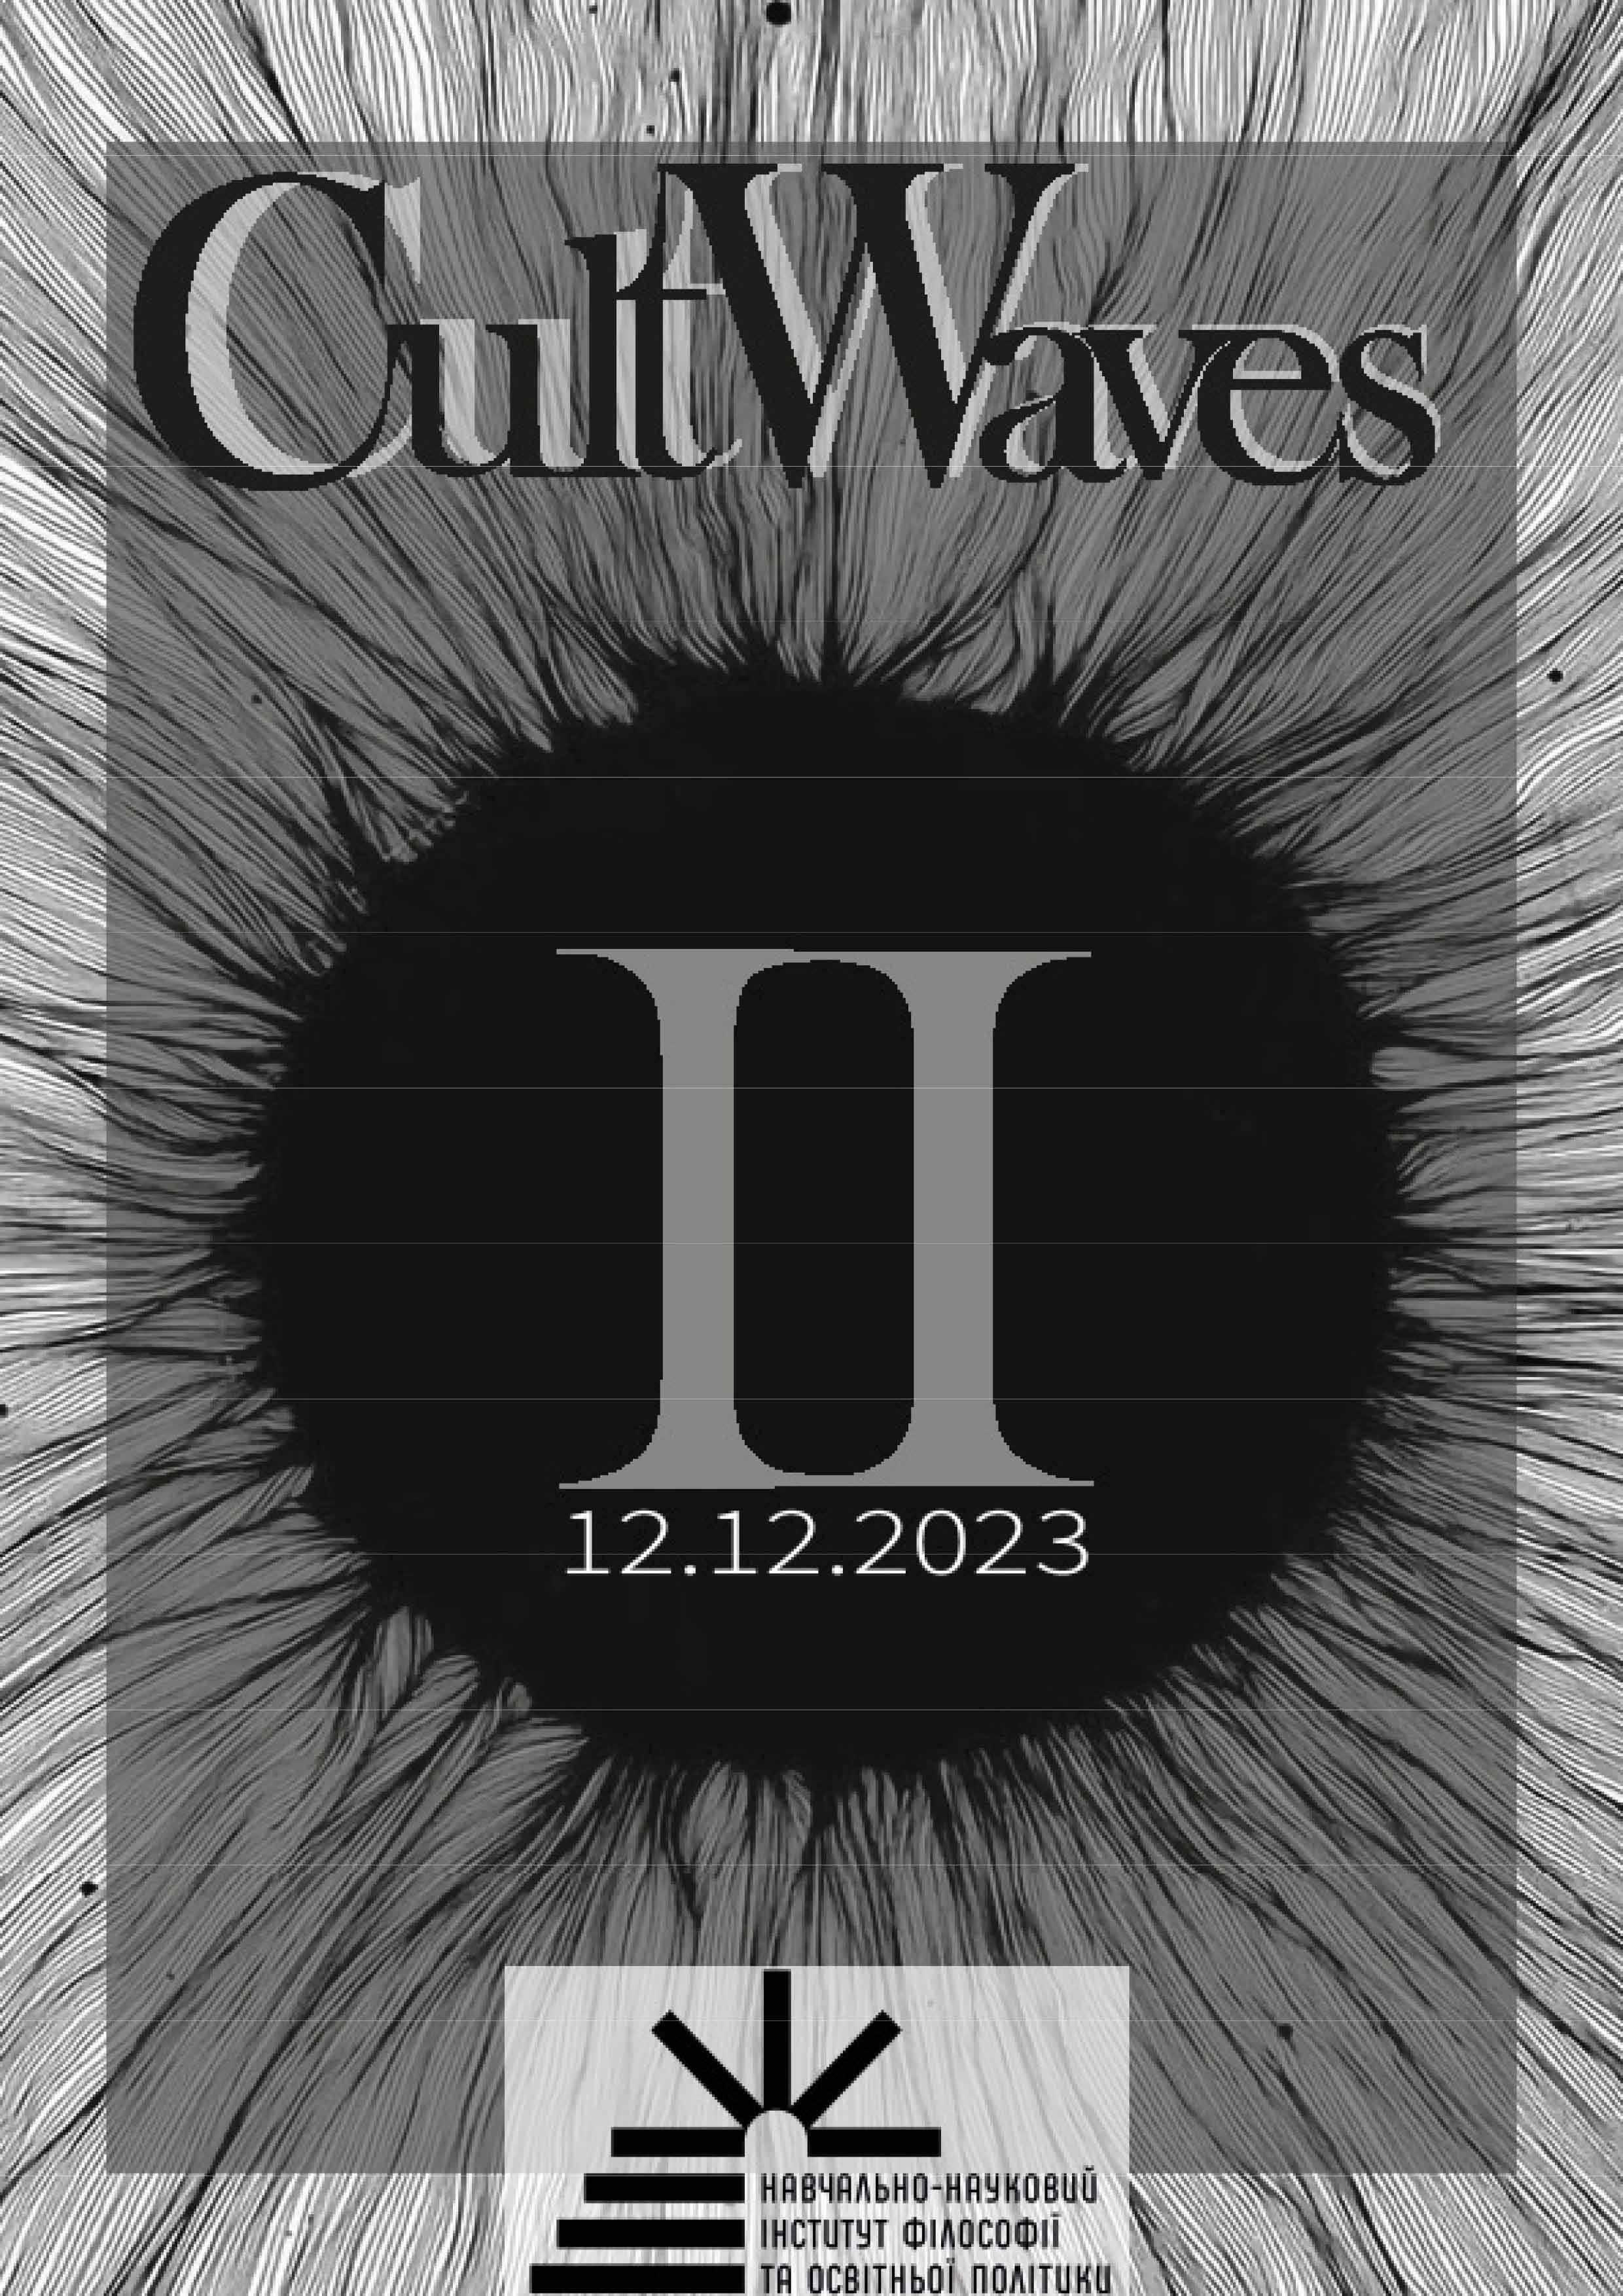 CultWaves2 2